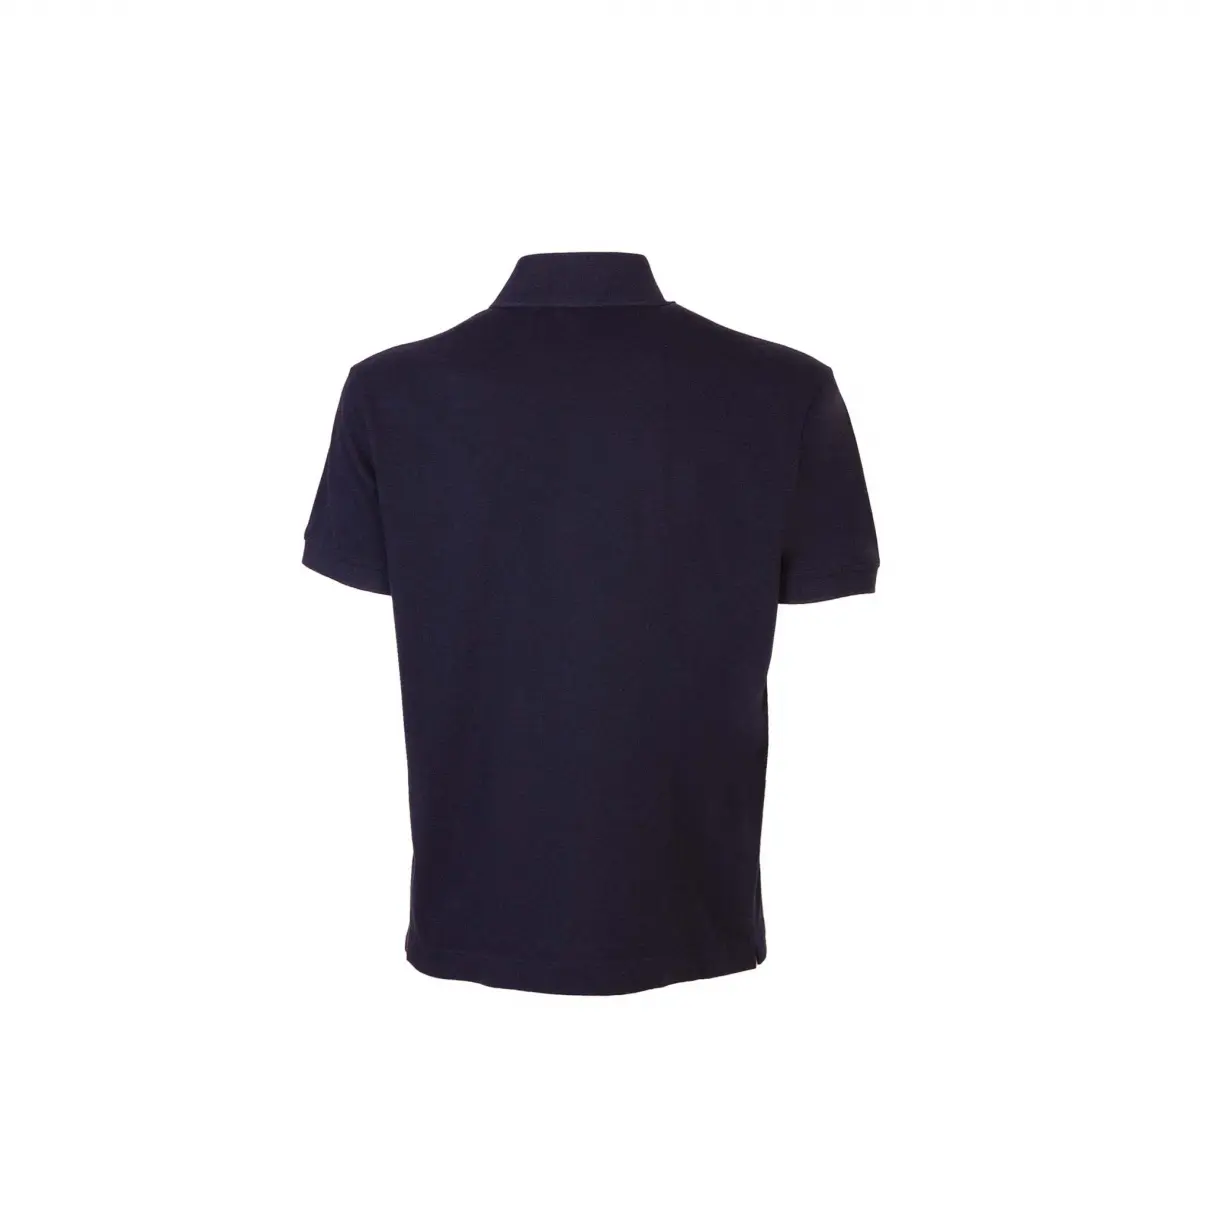 Buy Luca Faloni Polo shirt online